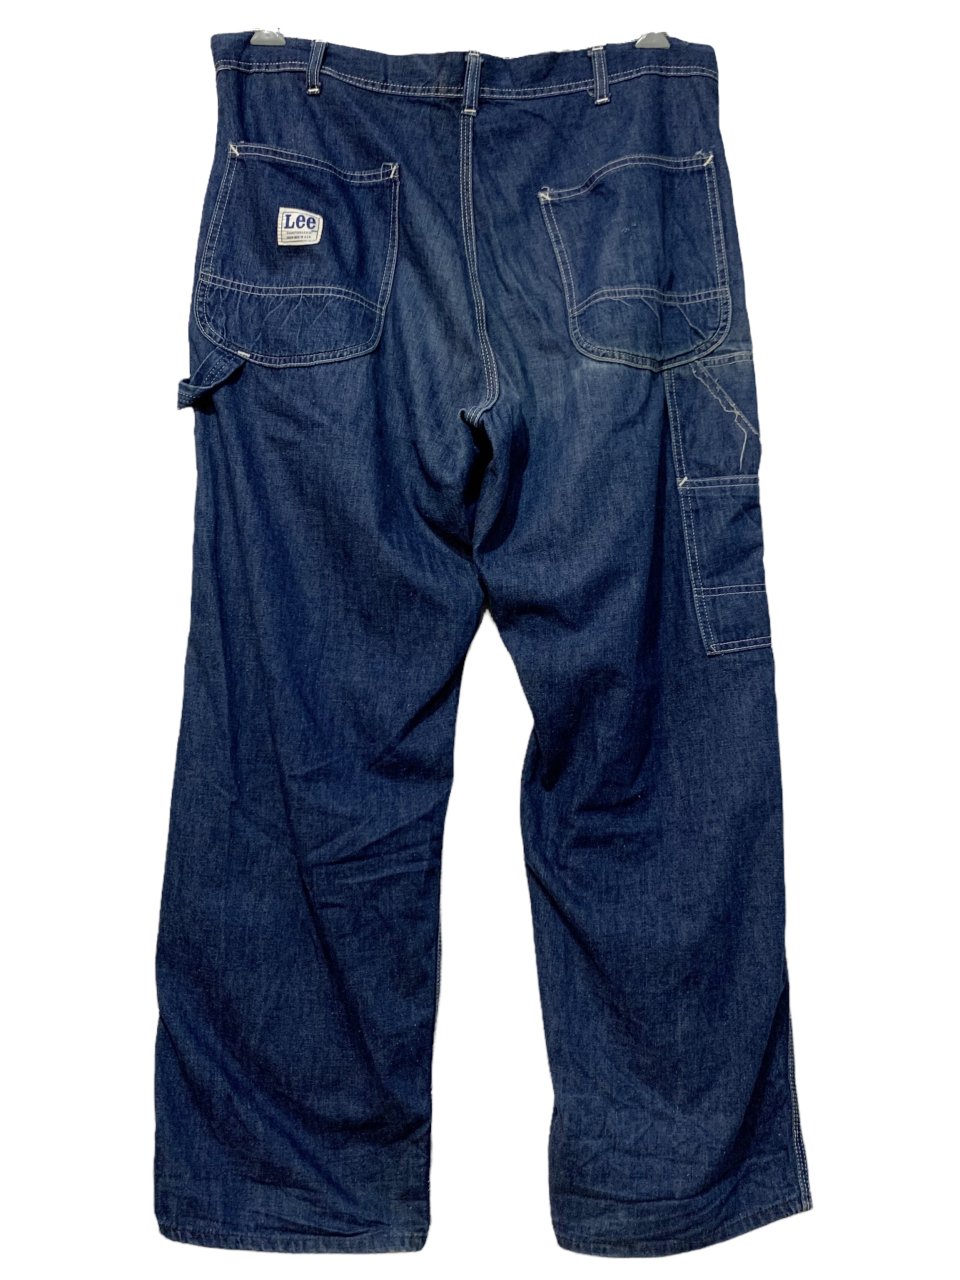 USA製 70s Lee Denim Painter Pants 紺 W38×L29 リー デニムパンツ 